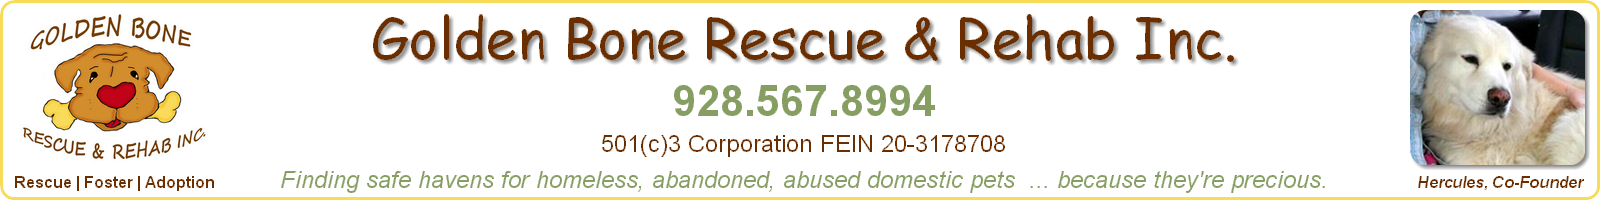 Forms - Golden Bone Rescue & Rehab, Inc., Sedona, Arizona